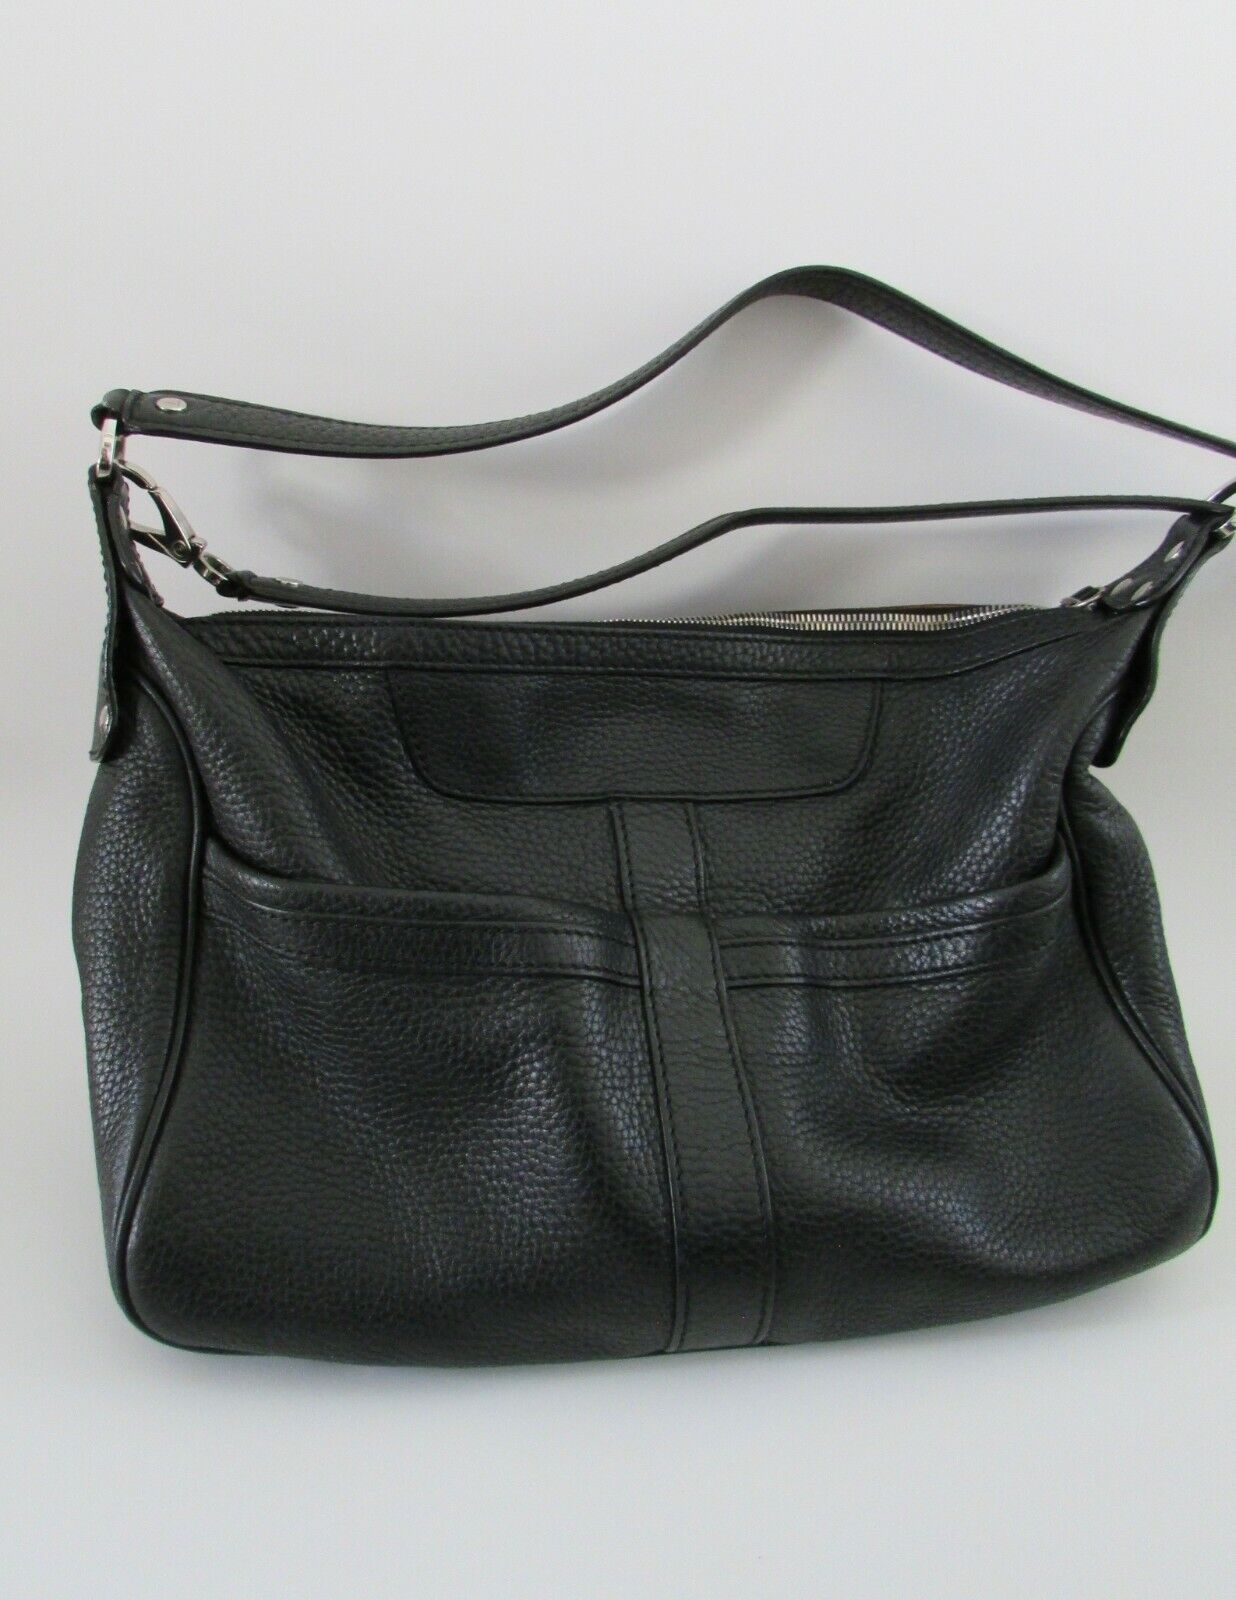 TOD'S Italy Black Leather Hobo Satchel/Crossbody Bag